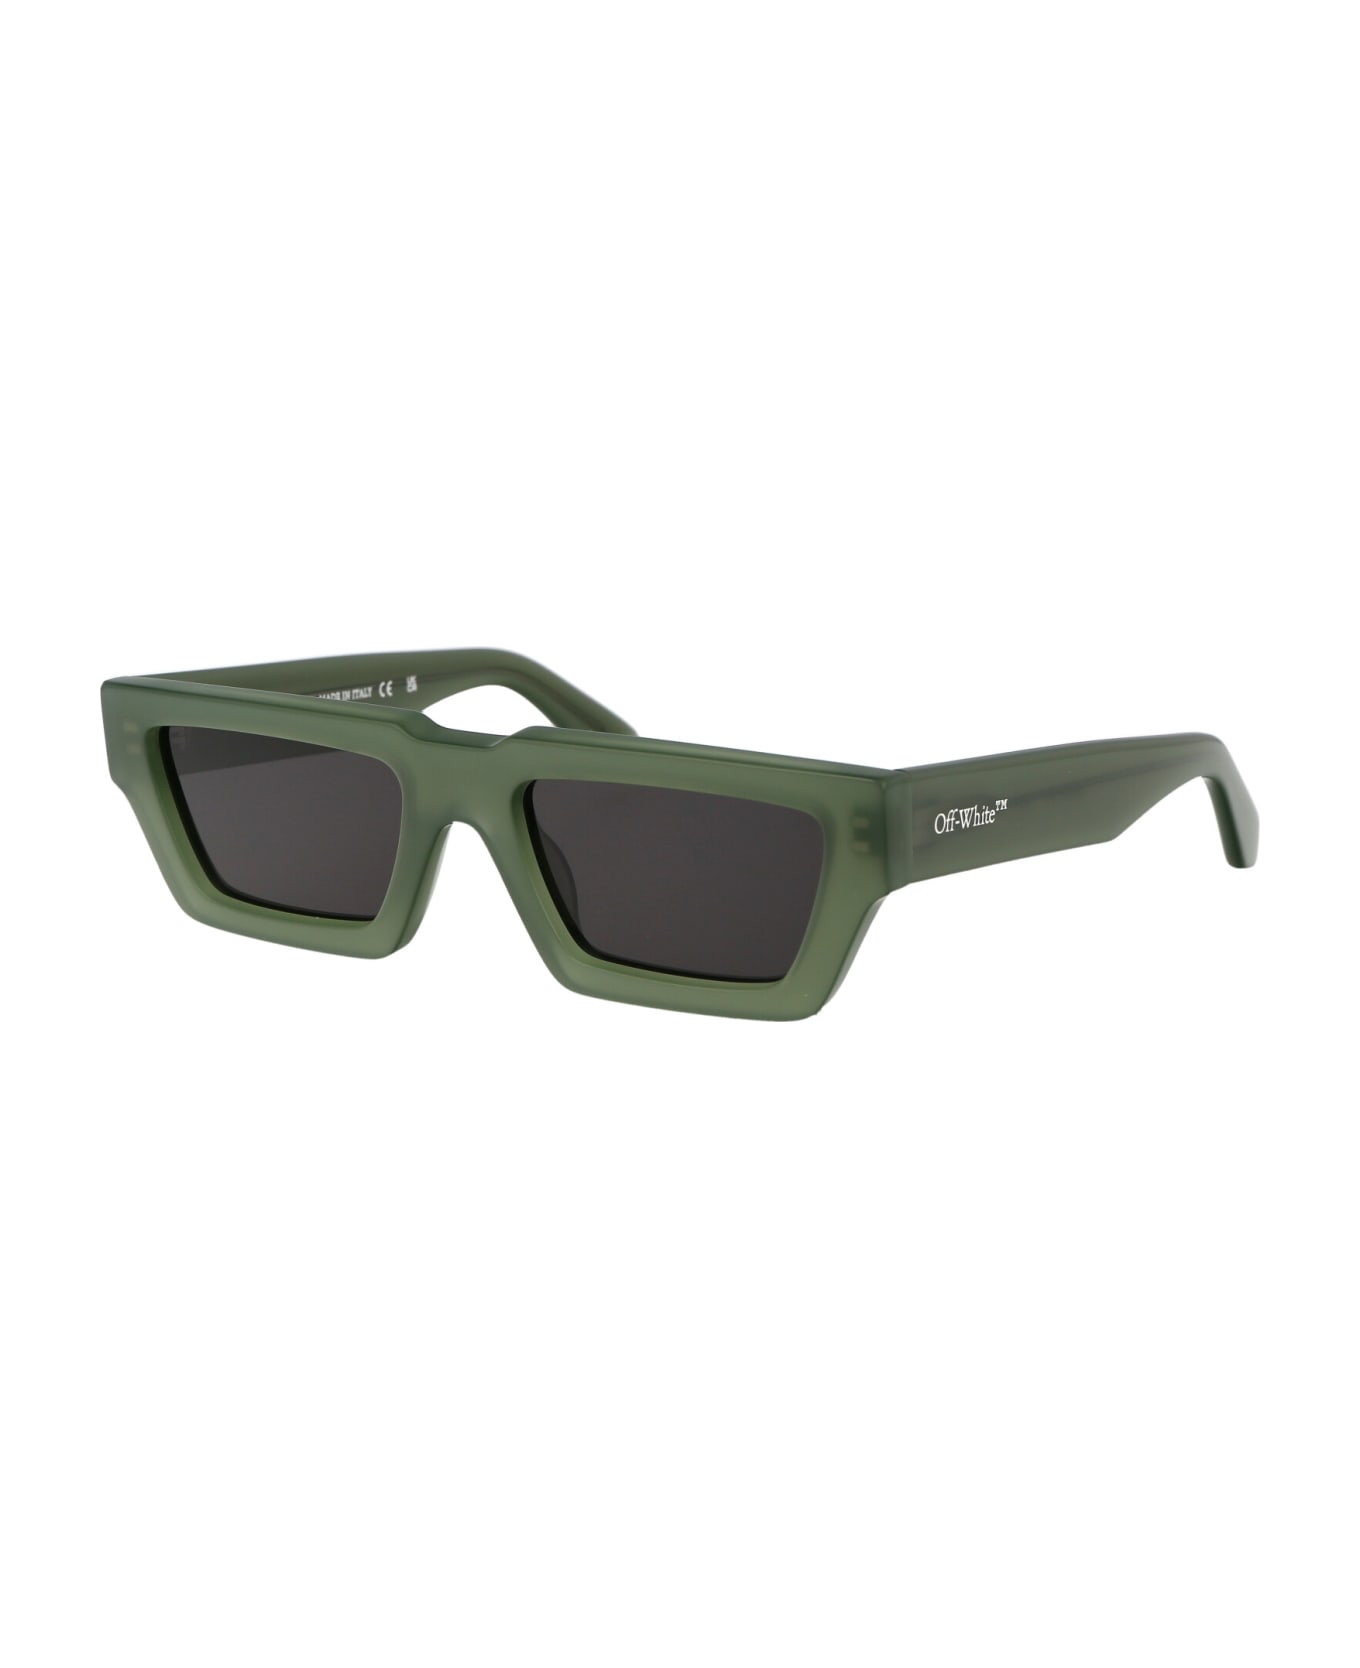 Off-White Manchester Sunglasses - green